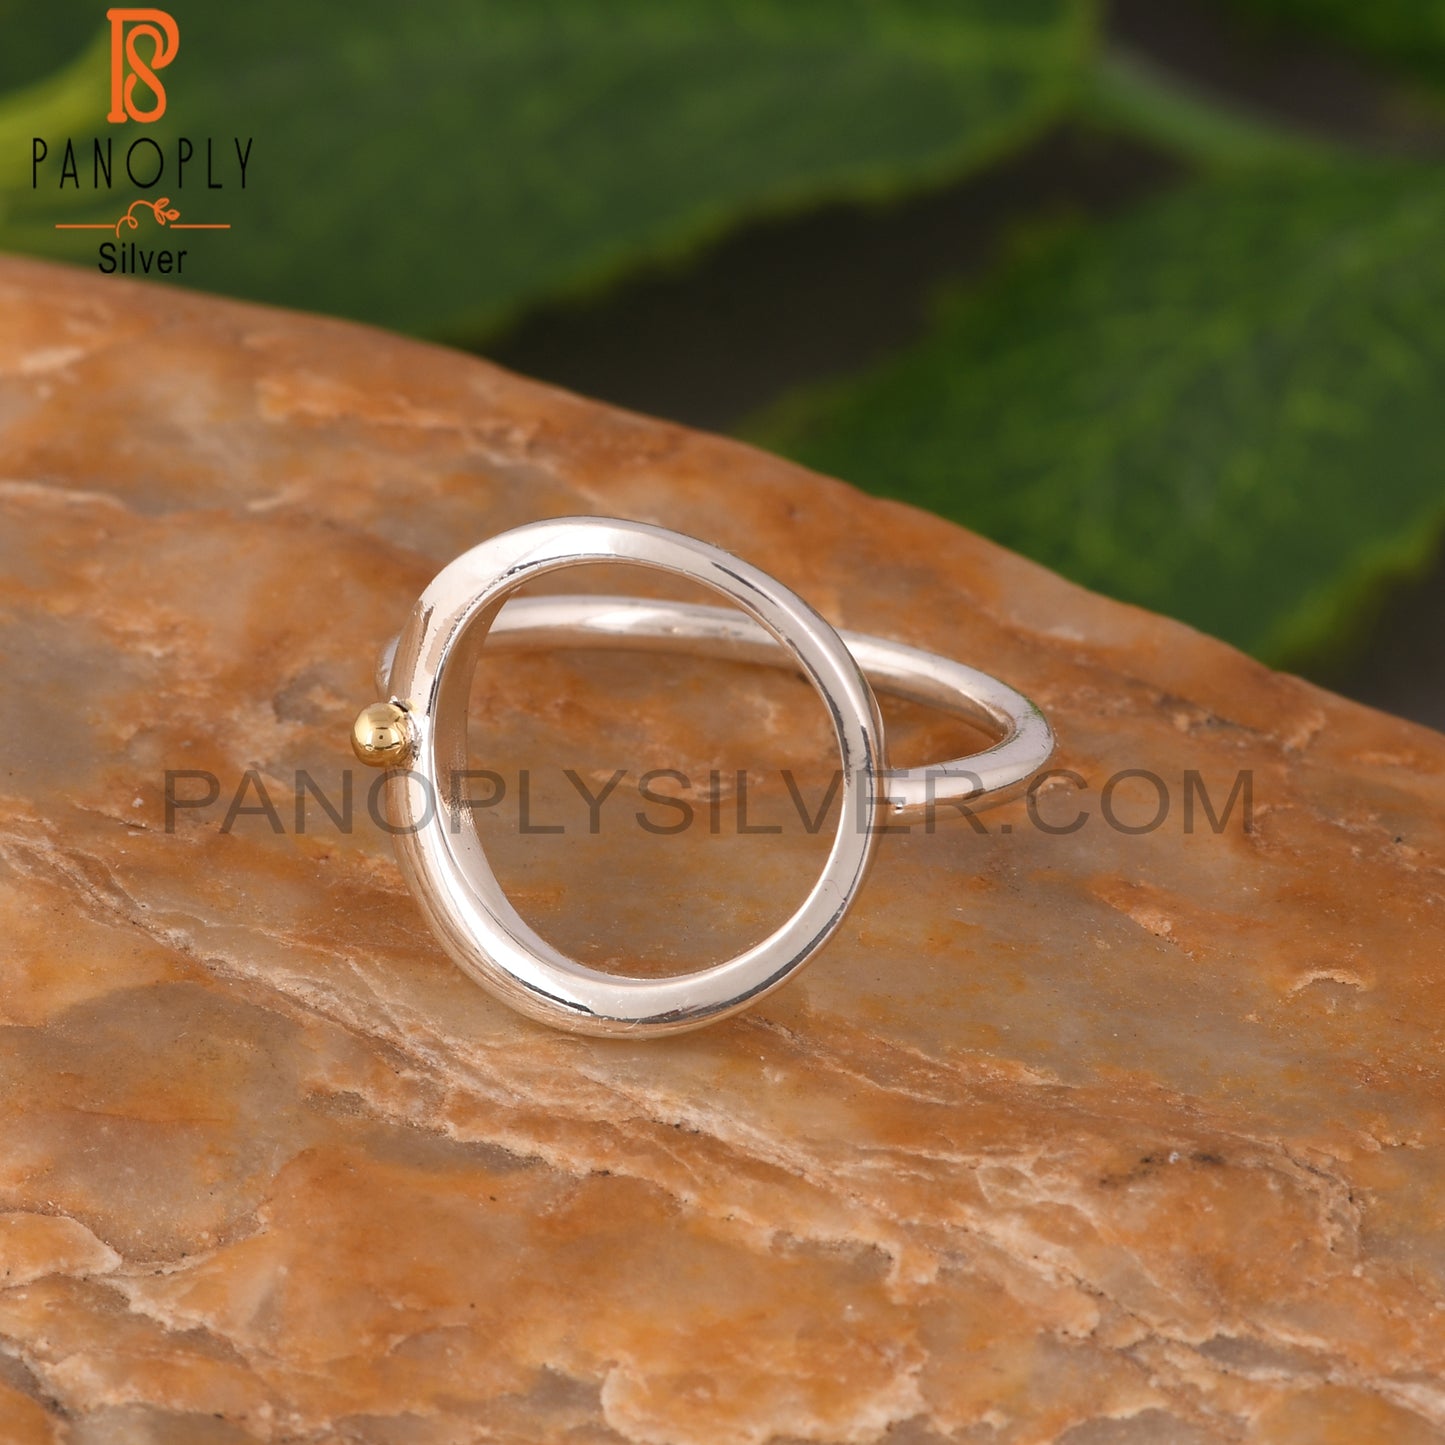 Handmade 925 Sterling Silver Gold Dot Ring